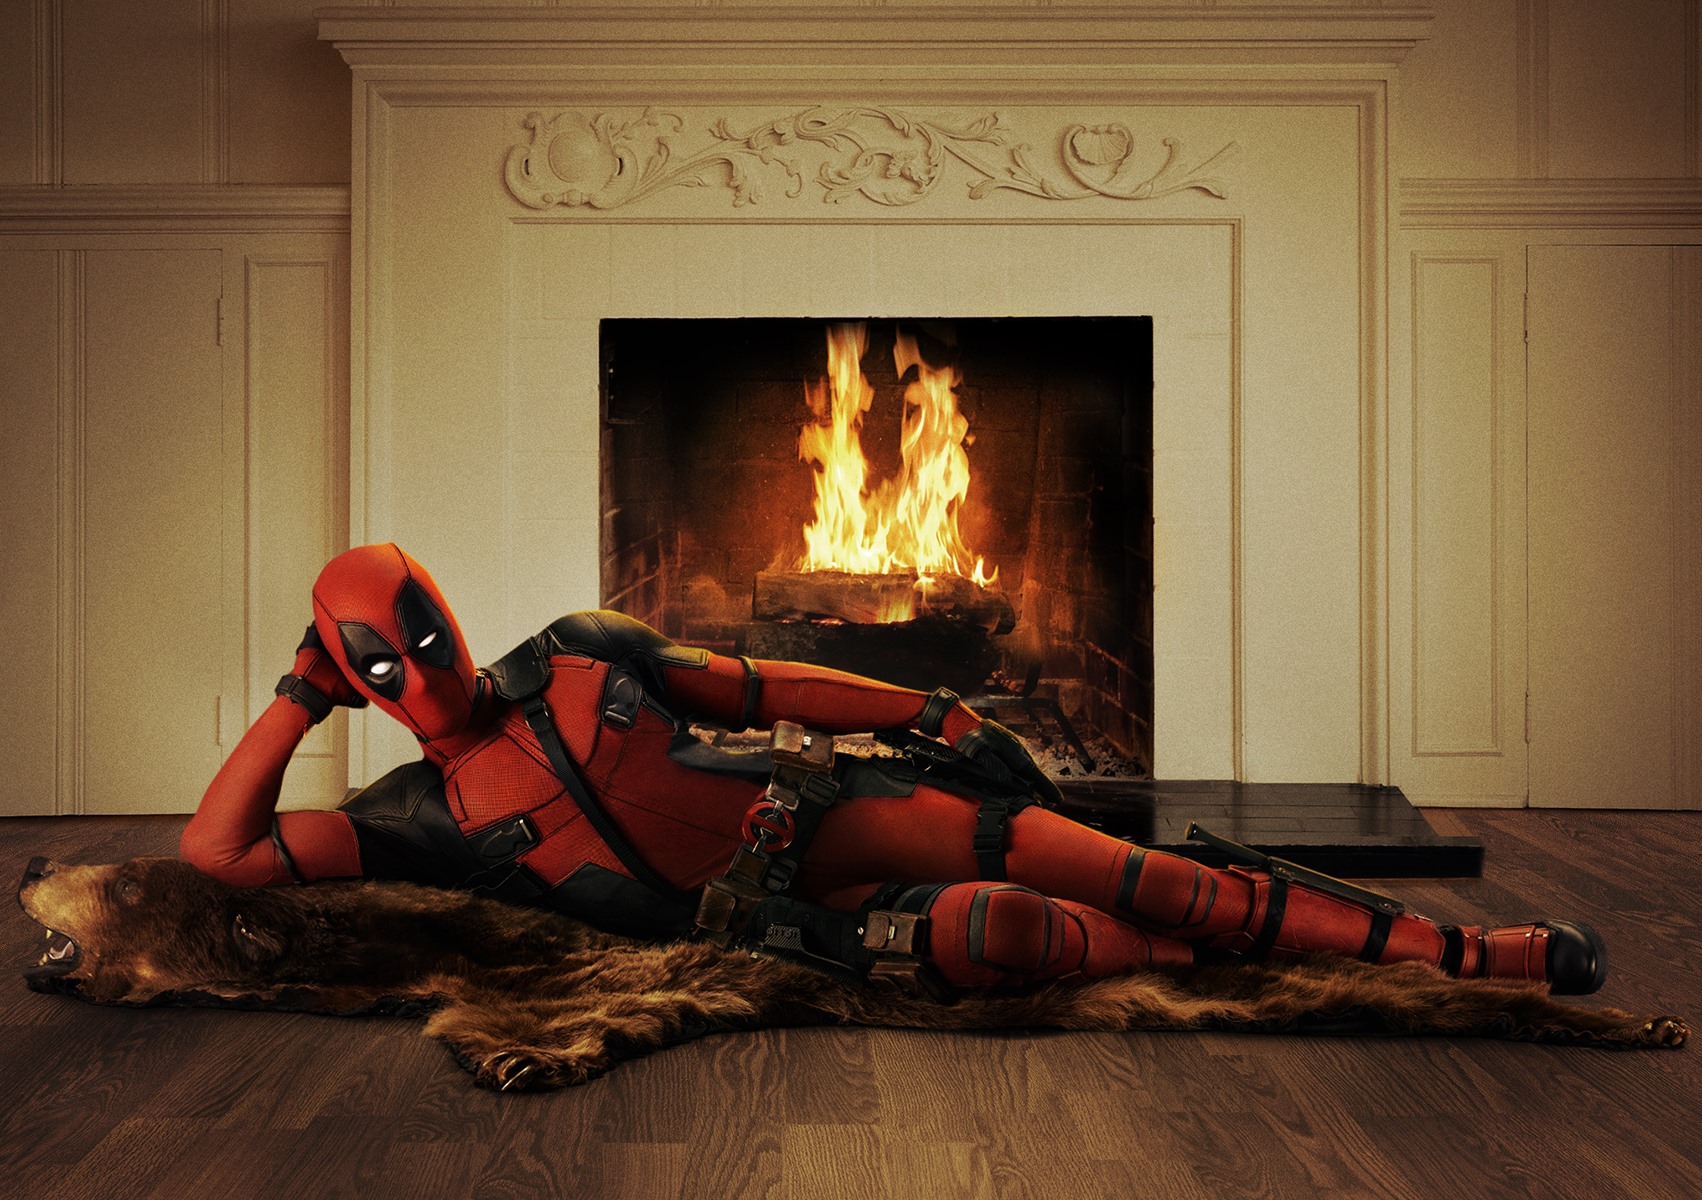 bam cruz add romantic bear skin rug in front of fireplace photo